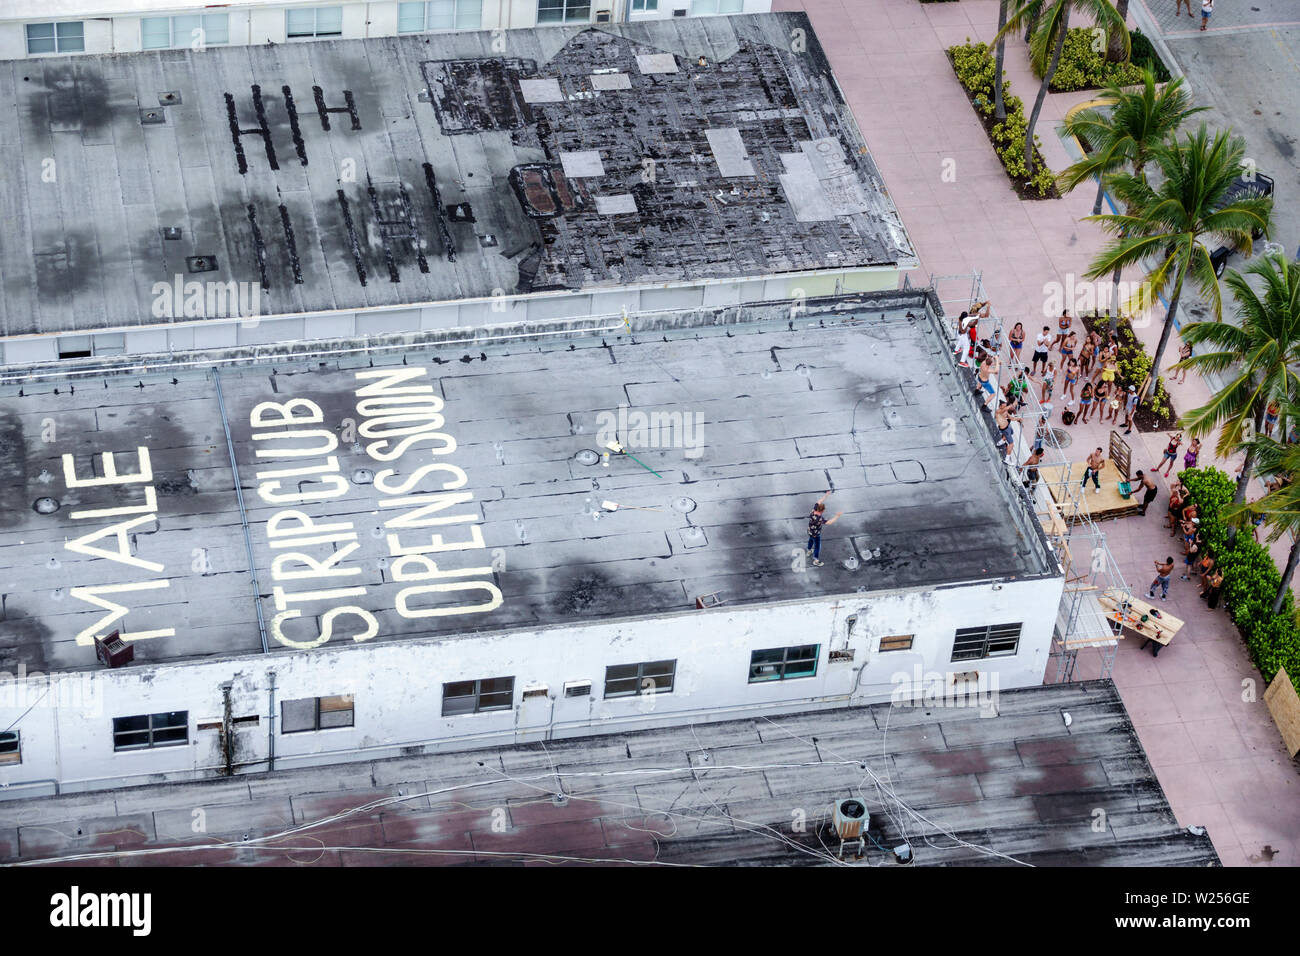 Miami Beach Florida,North Beach,Ocean Terrace,male strip club opens opening soon,movie shoot,crew,dancers,painted rooftop,FL190615003 Stock Photo